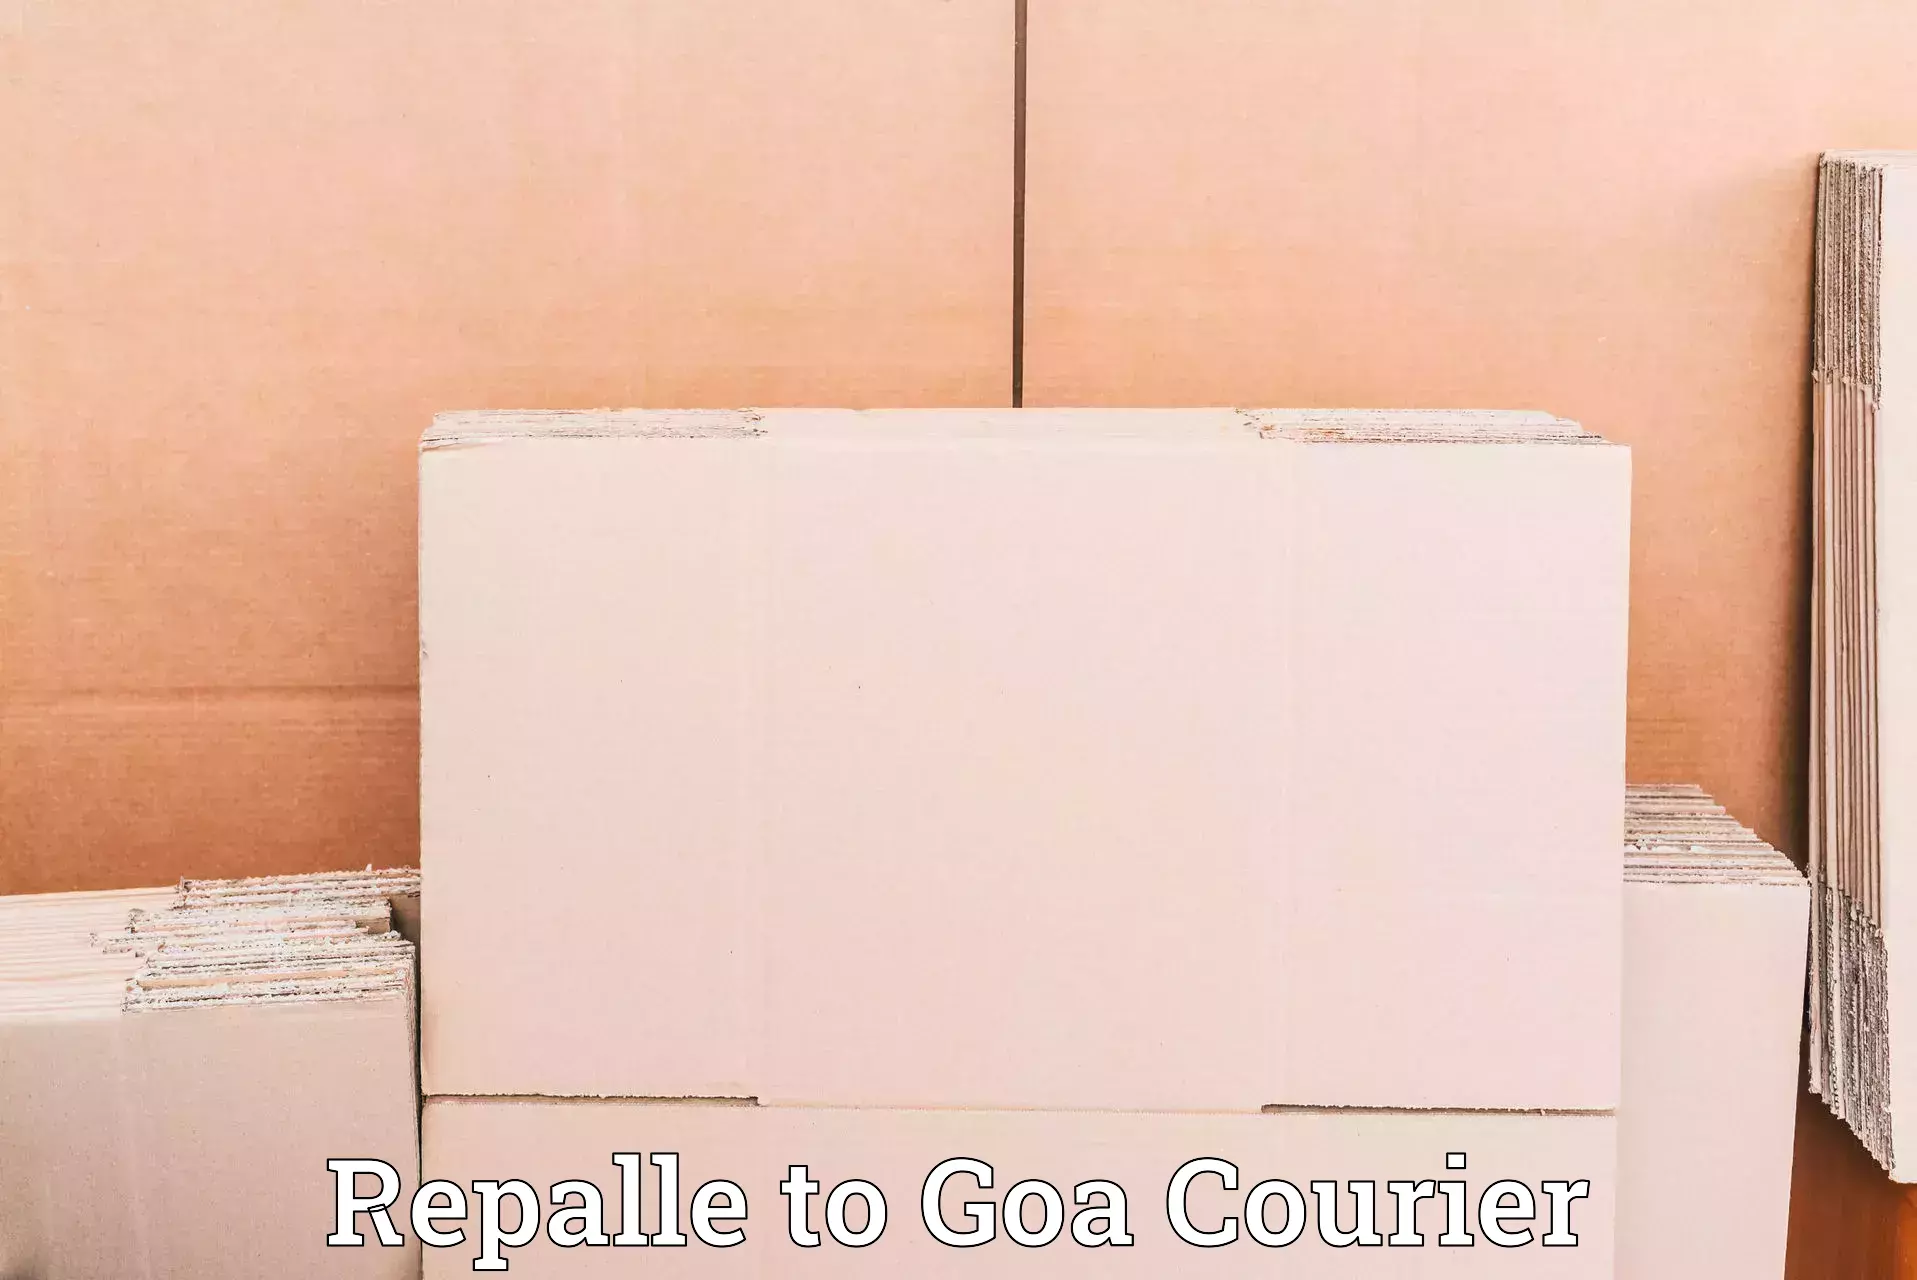 Express logistics providers Repalle to Goa